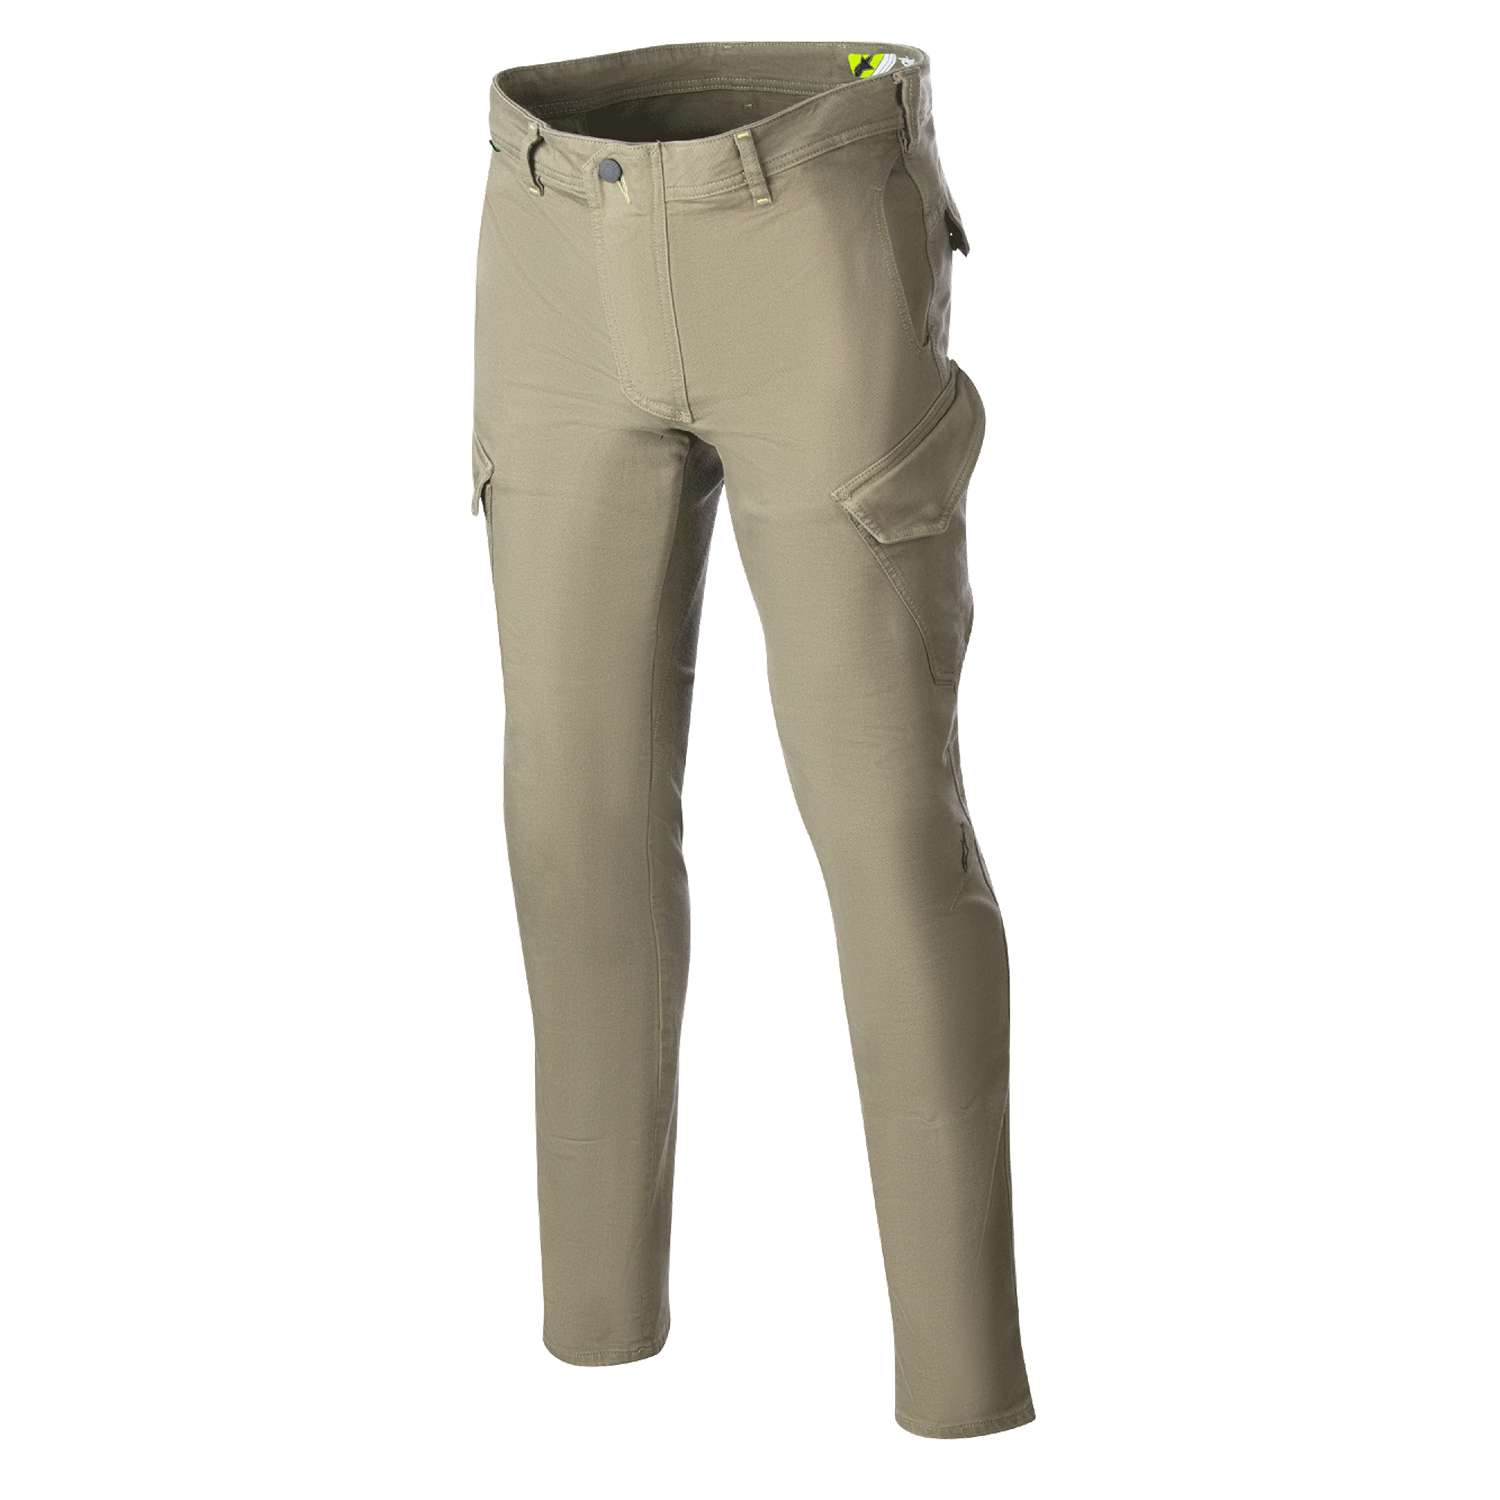 Image of Alpinestars Caliber Slim Fit Tech Riding Pants Military Green Size 32 ID 8059347150307